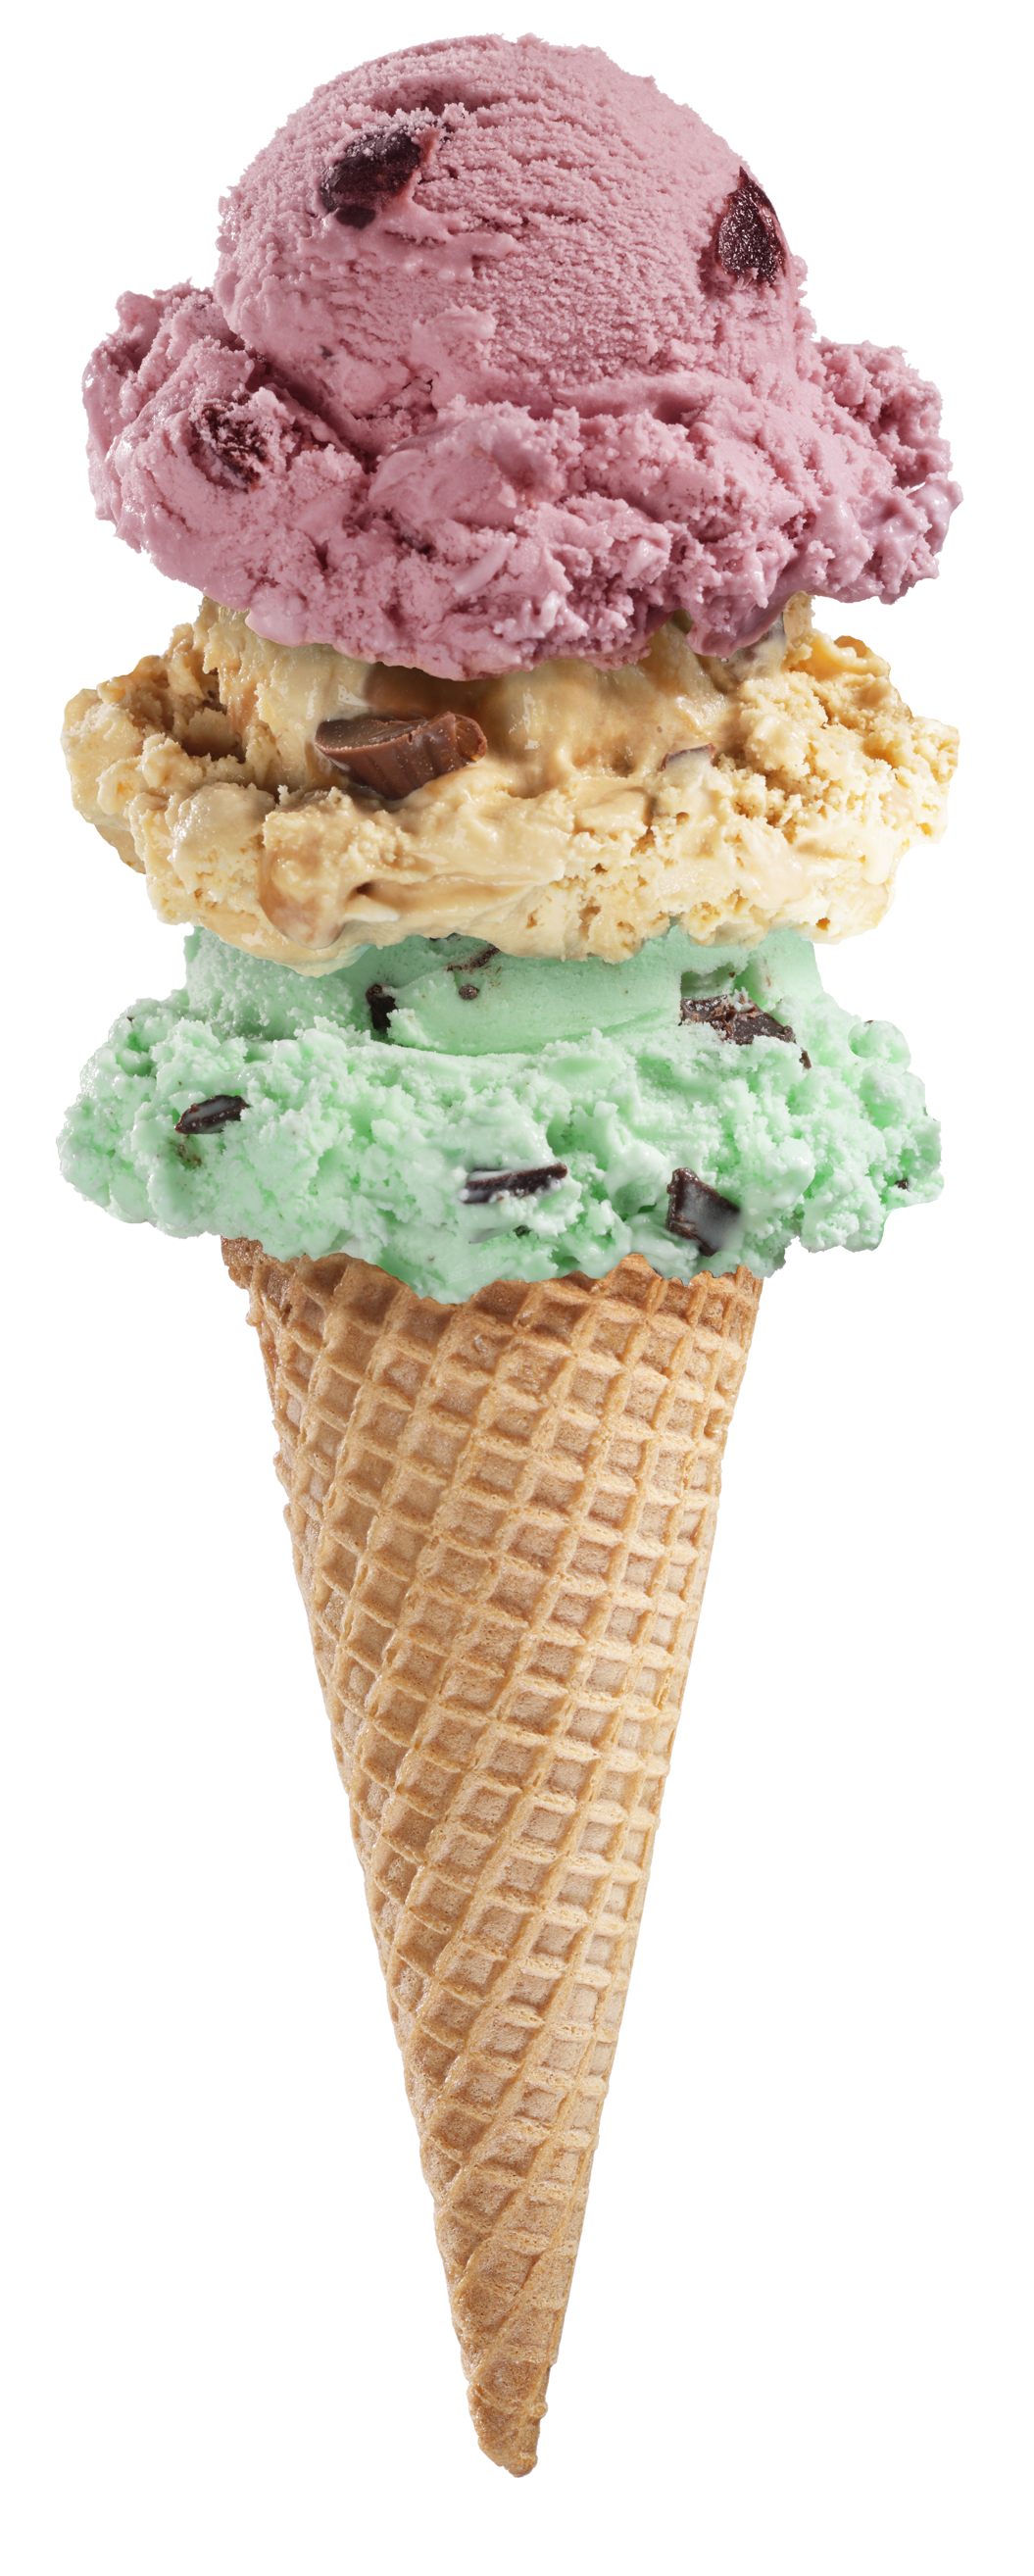 Ice Cream Cone PNG Pic